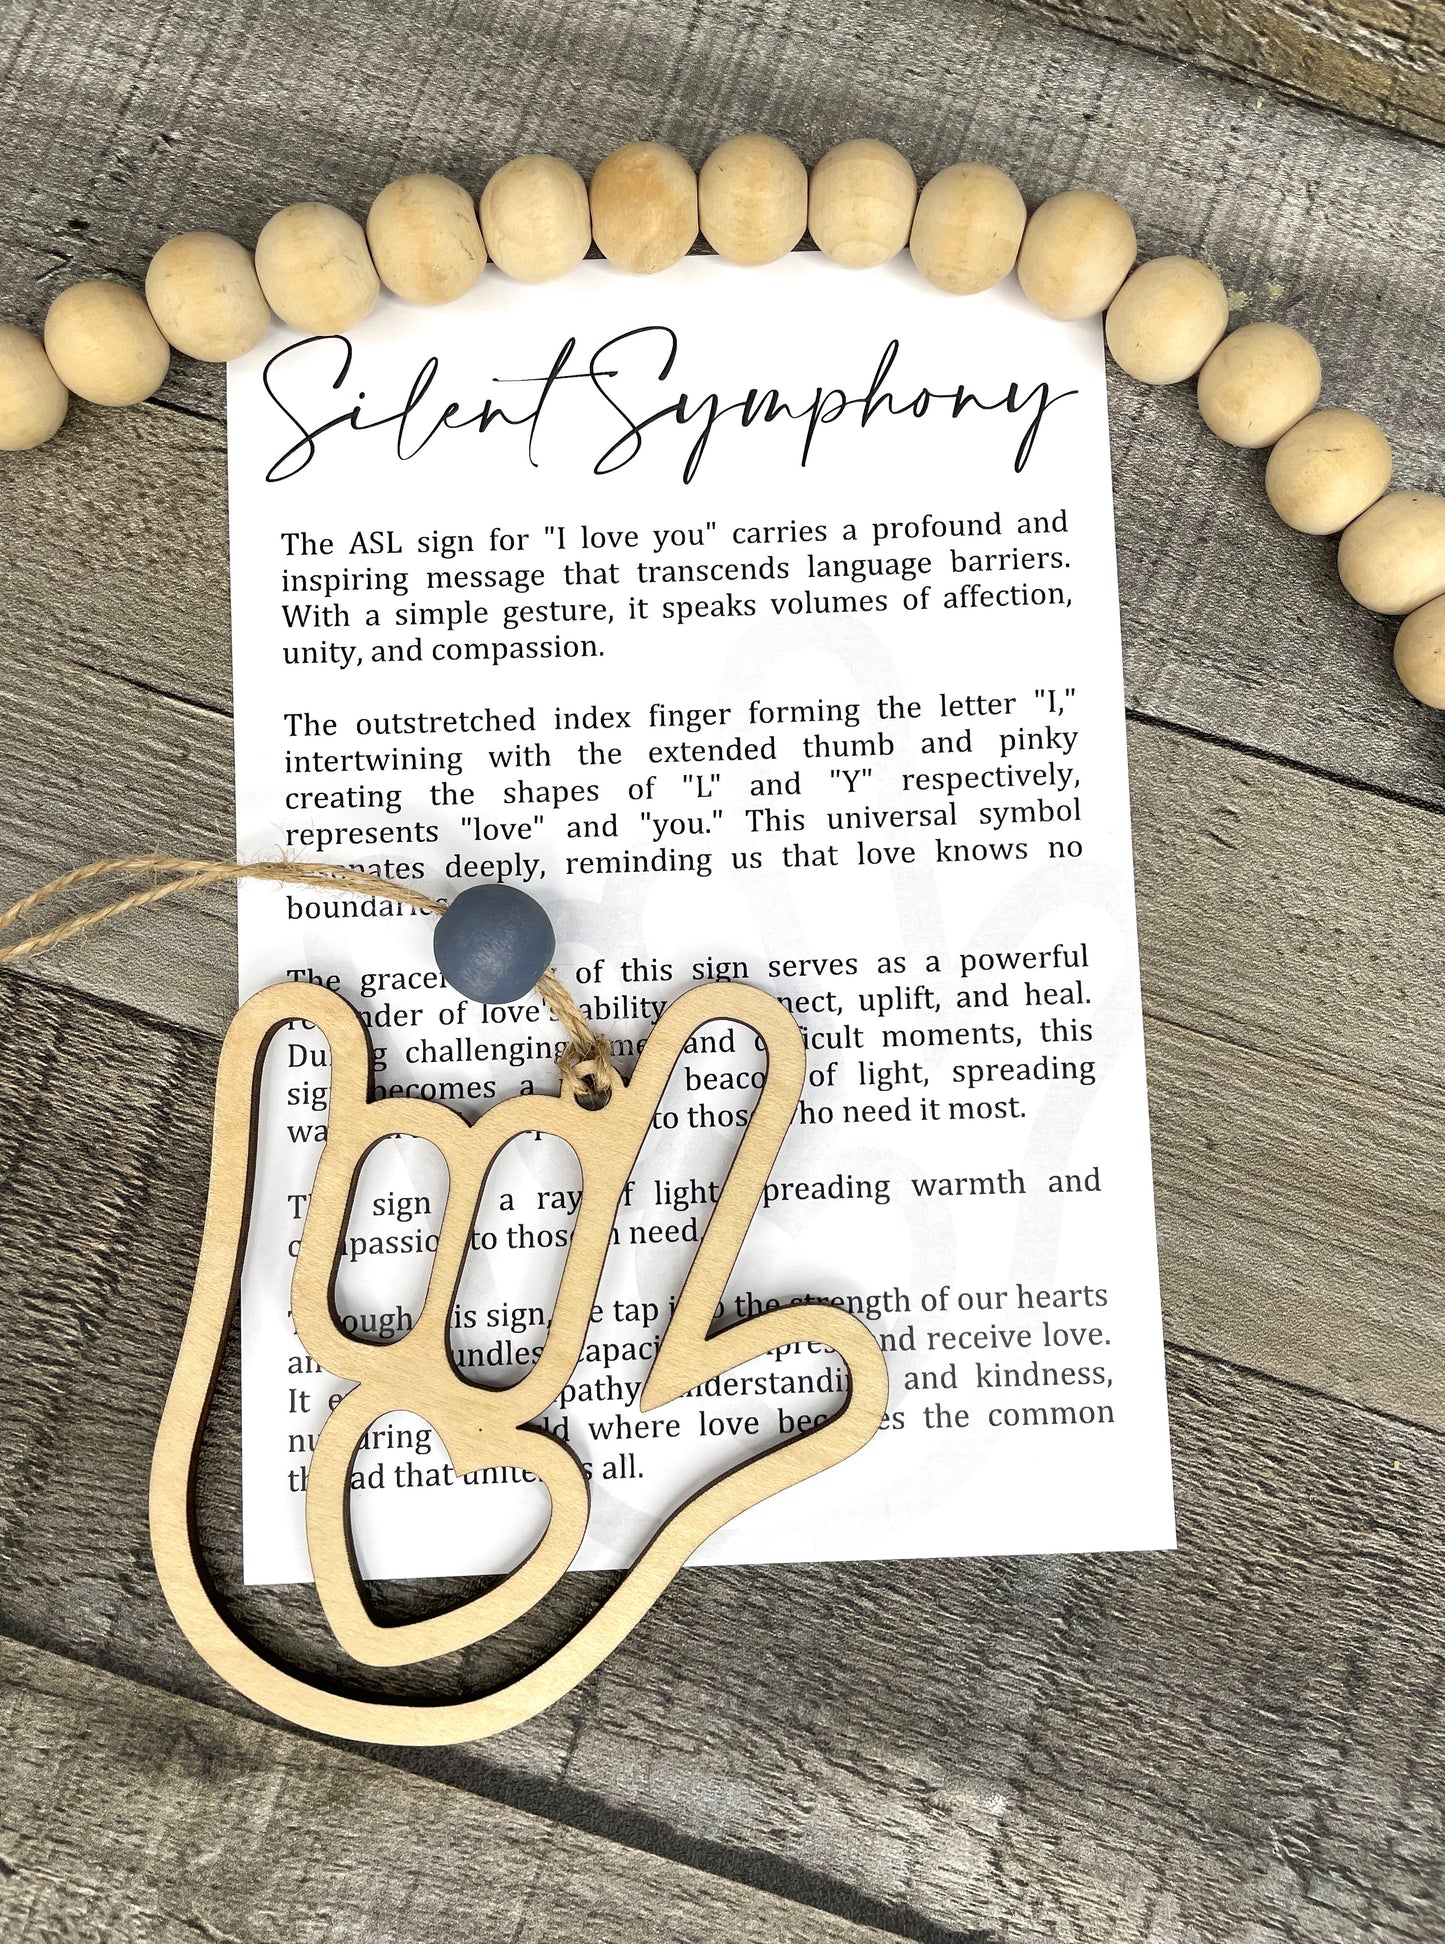 I Love You ASL Story Ornament: Silent Symphony